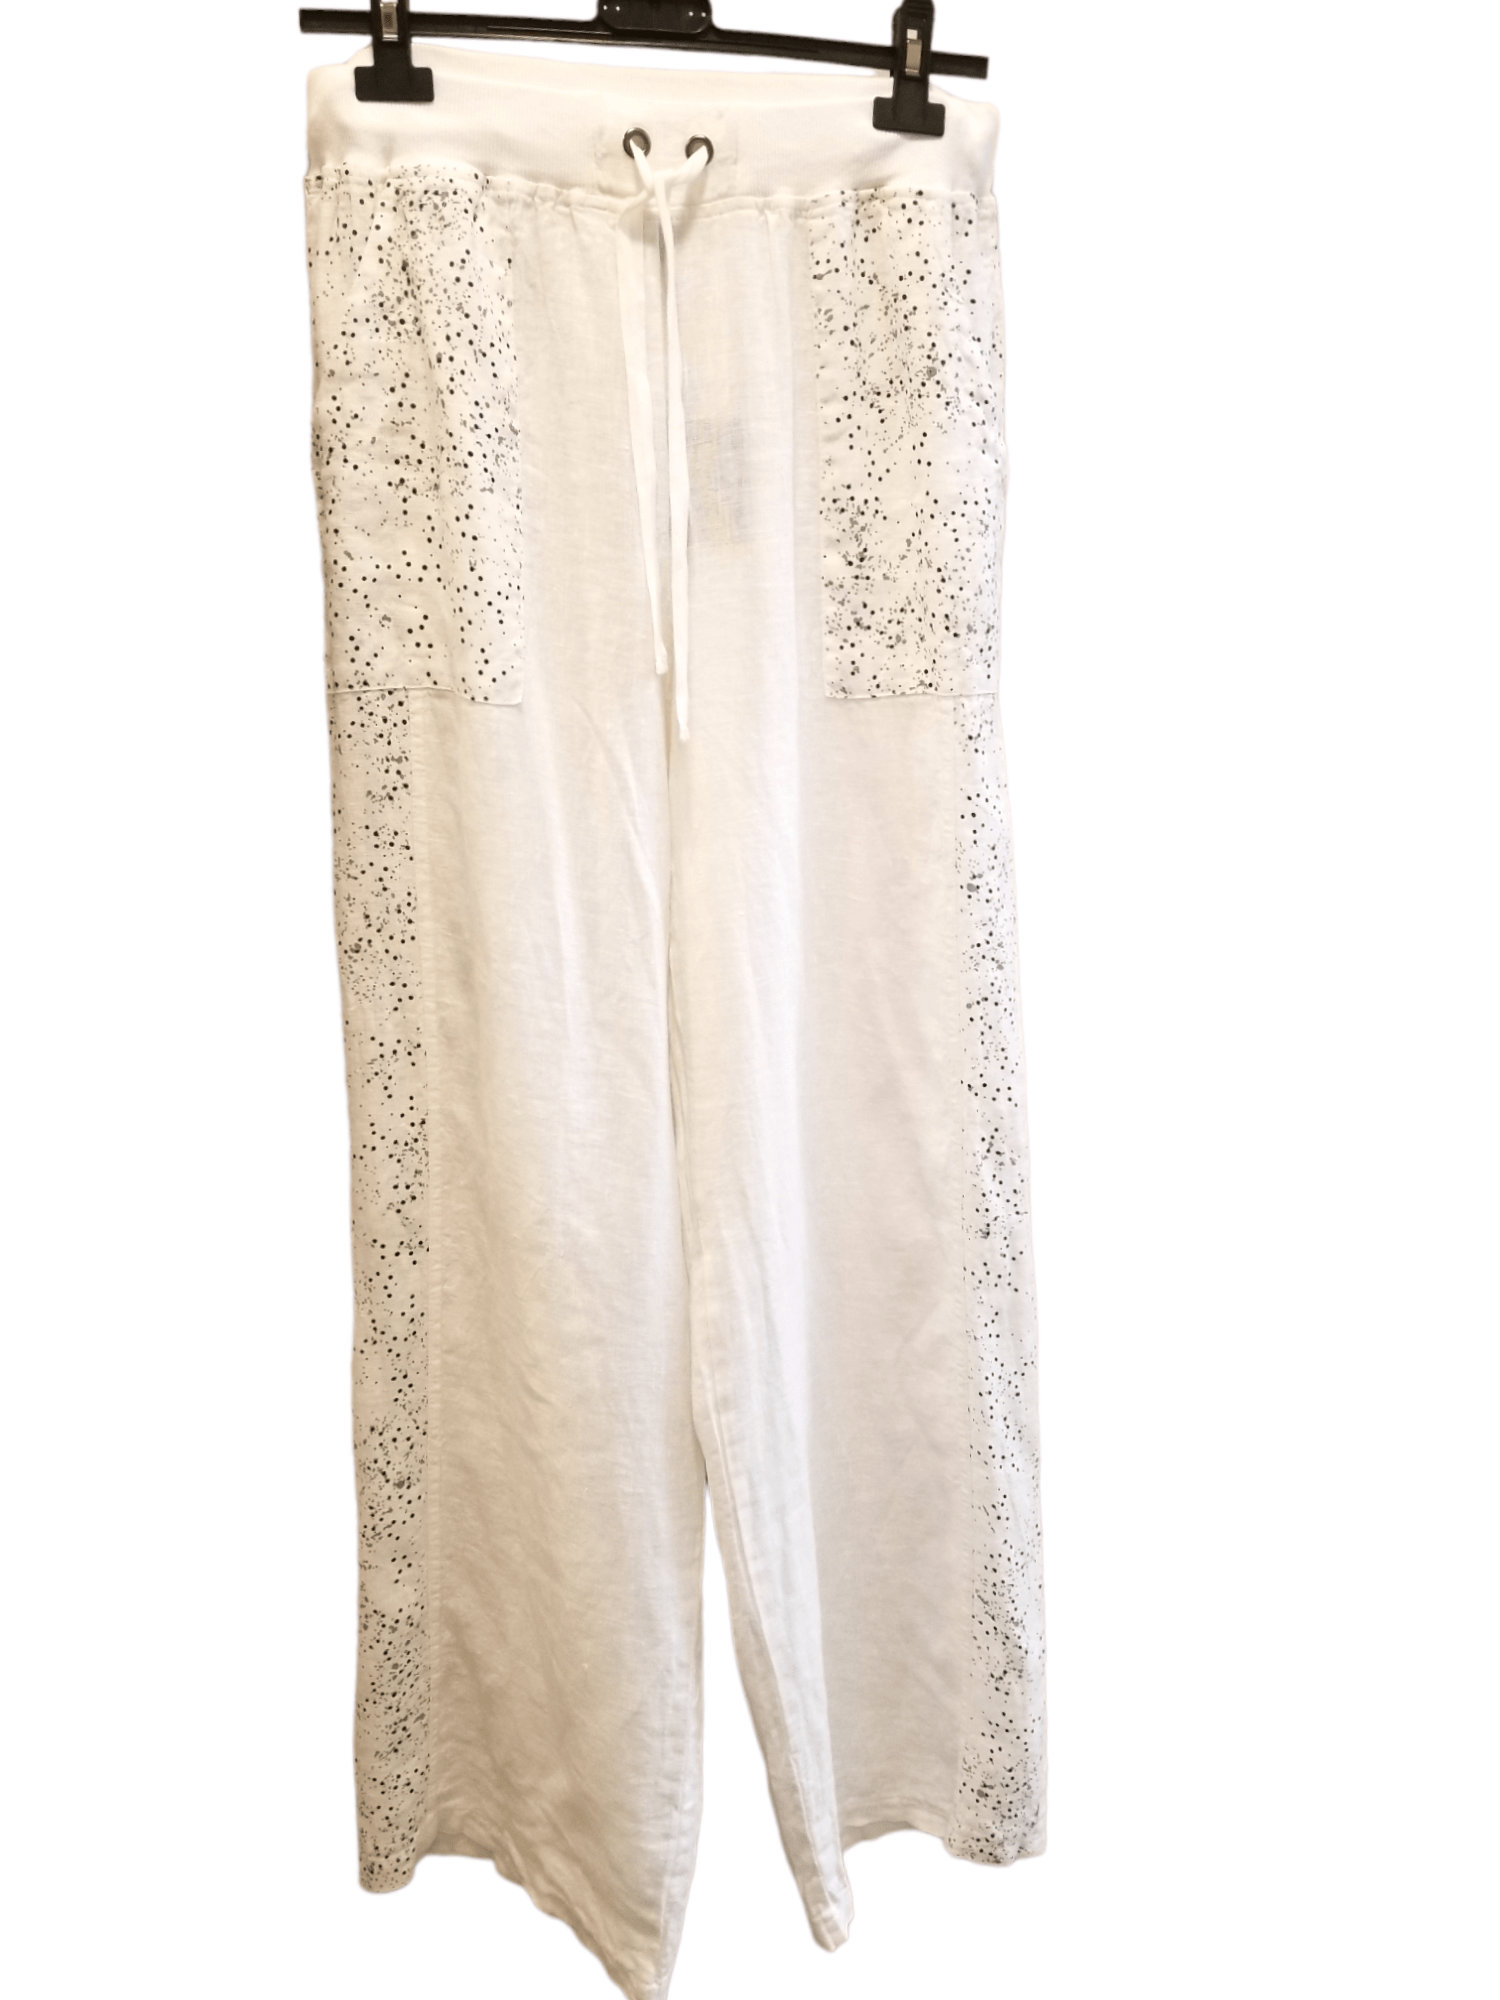 Inizio Women's Pants White bkgd black dots / S Linen Pants from Inizio - Dots